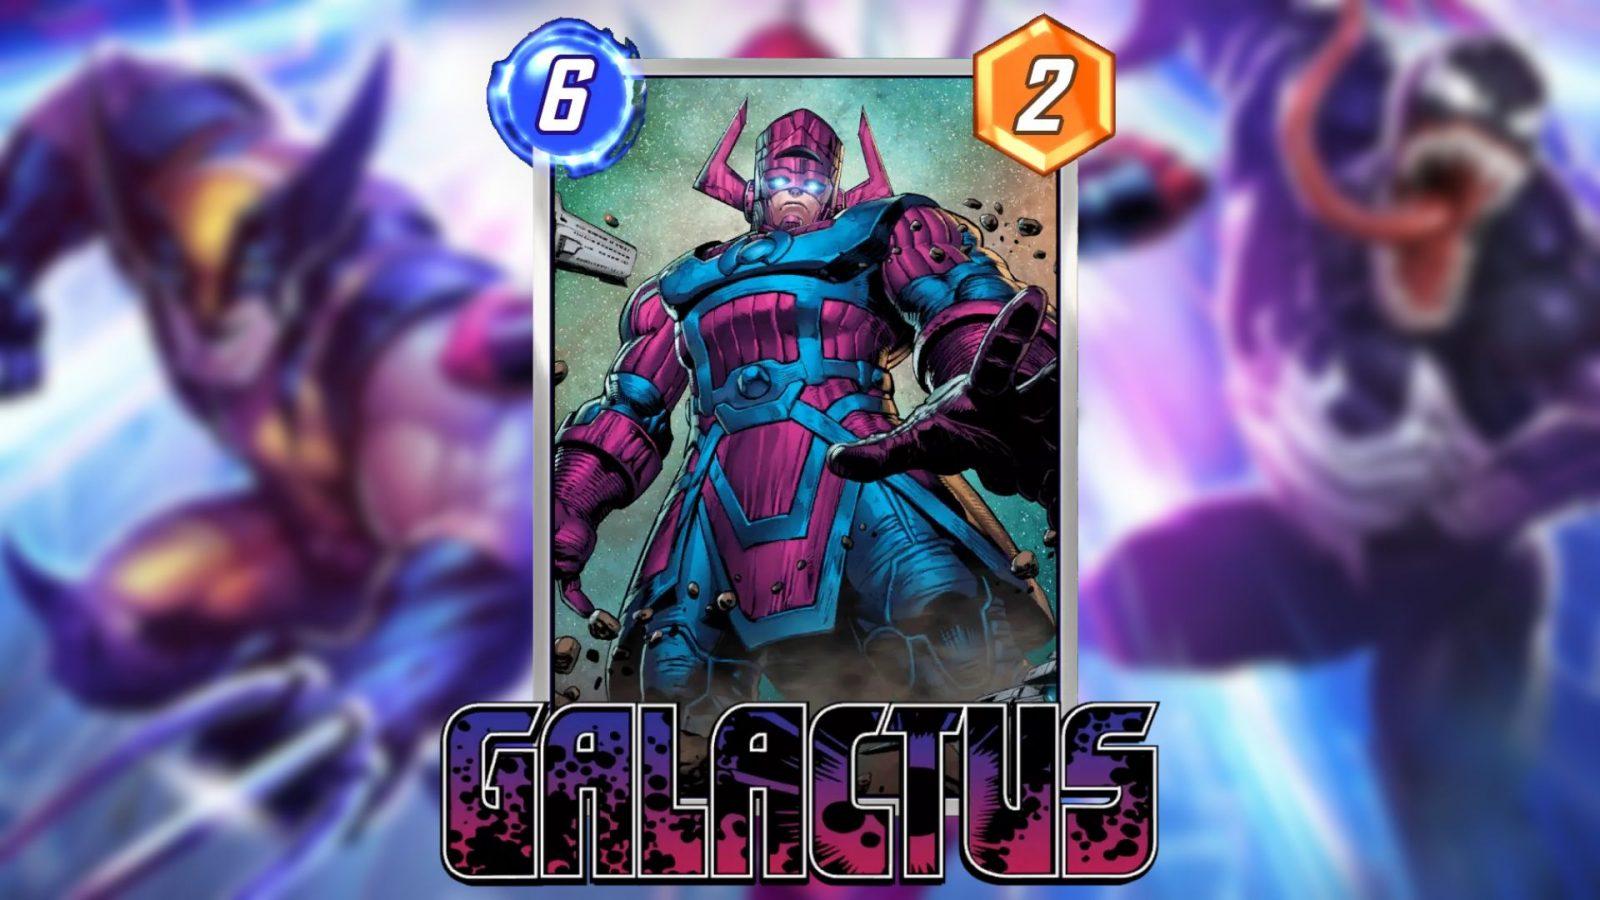 Marvel Snap players desperate for Galactus meta nerf: “It's boring